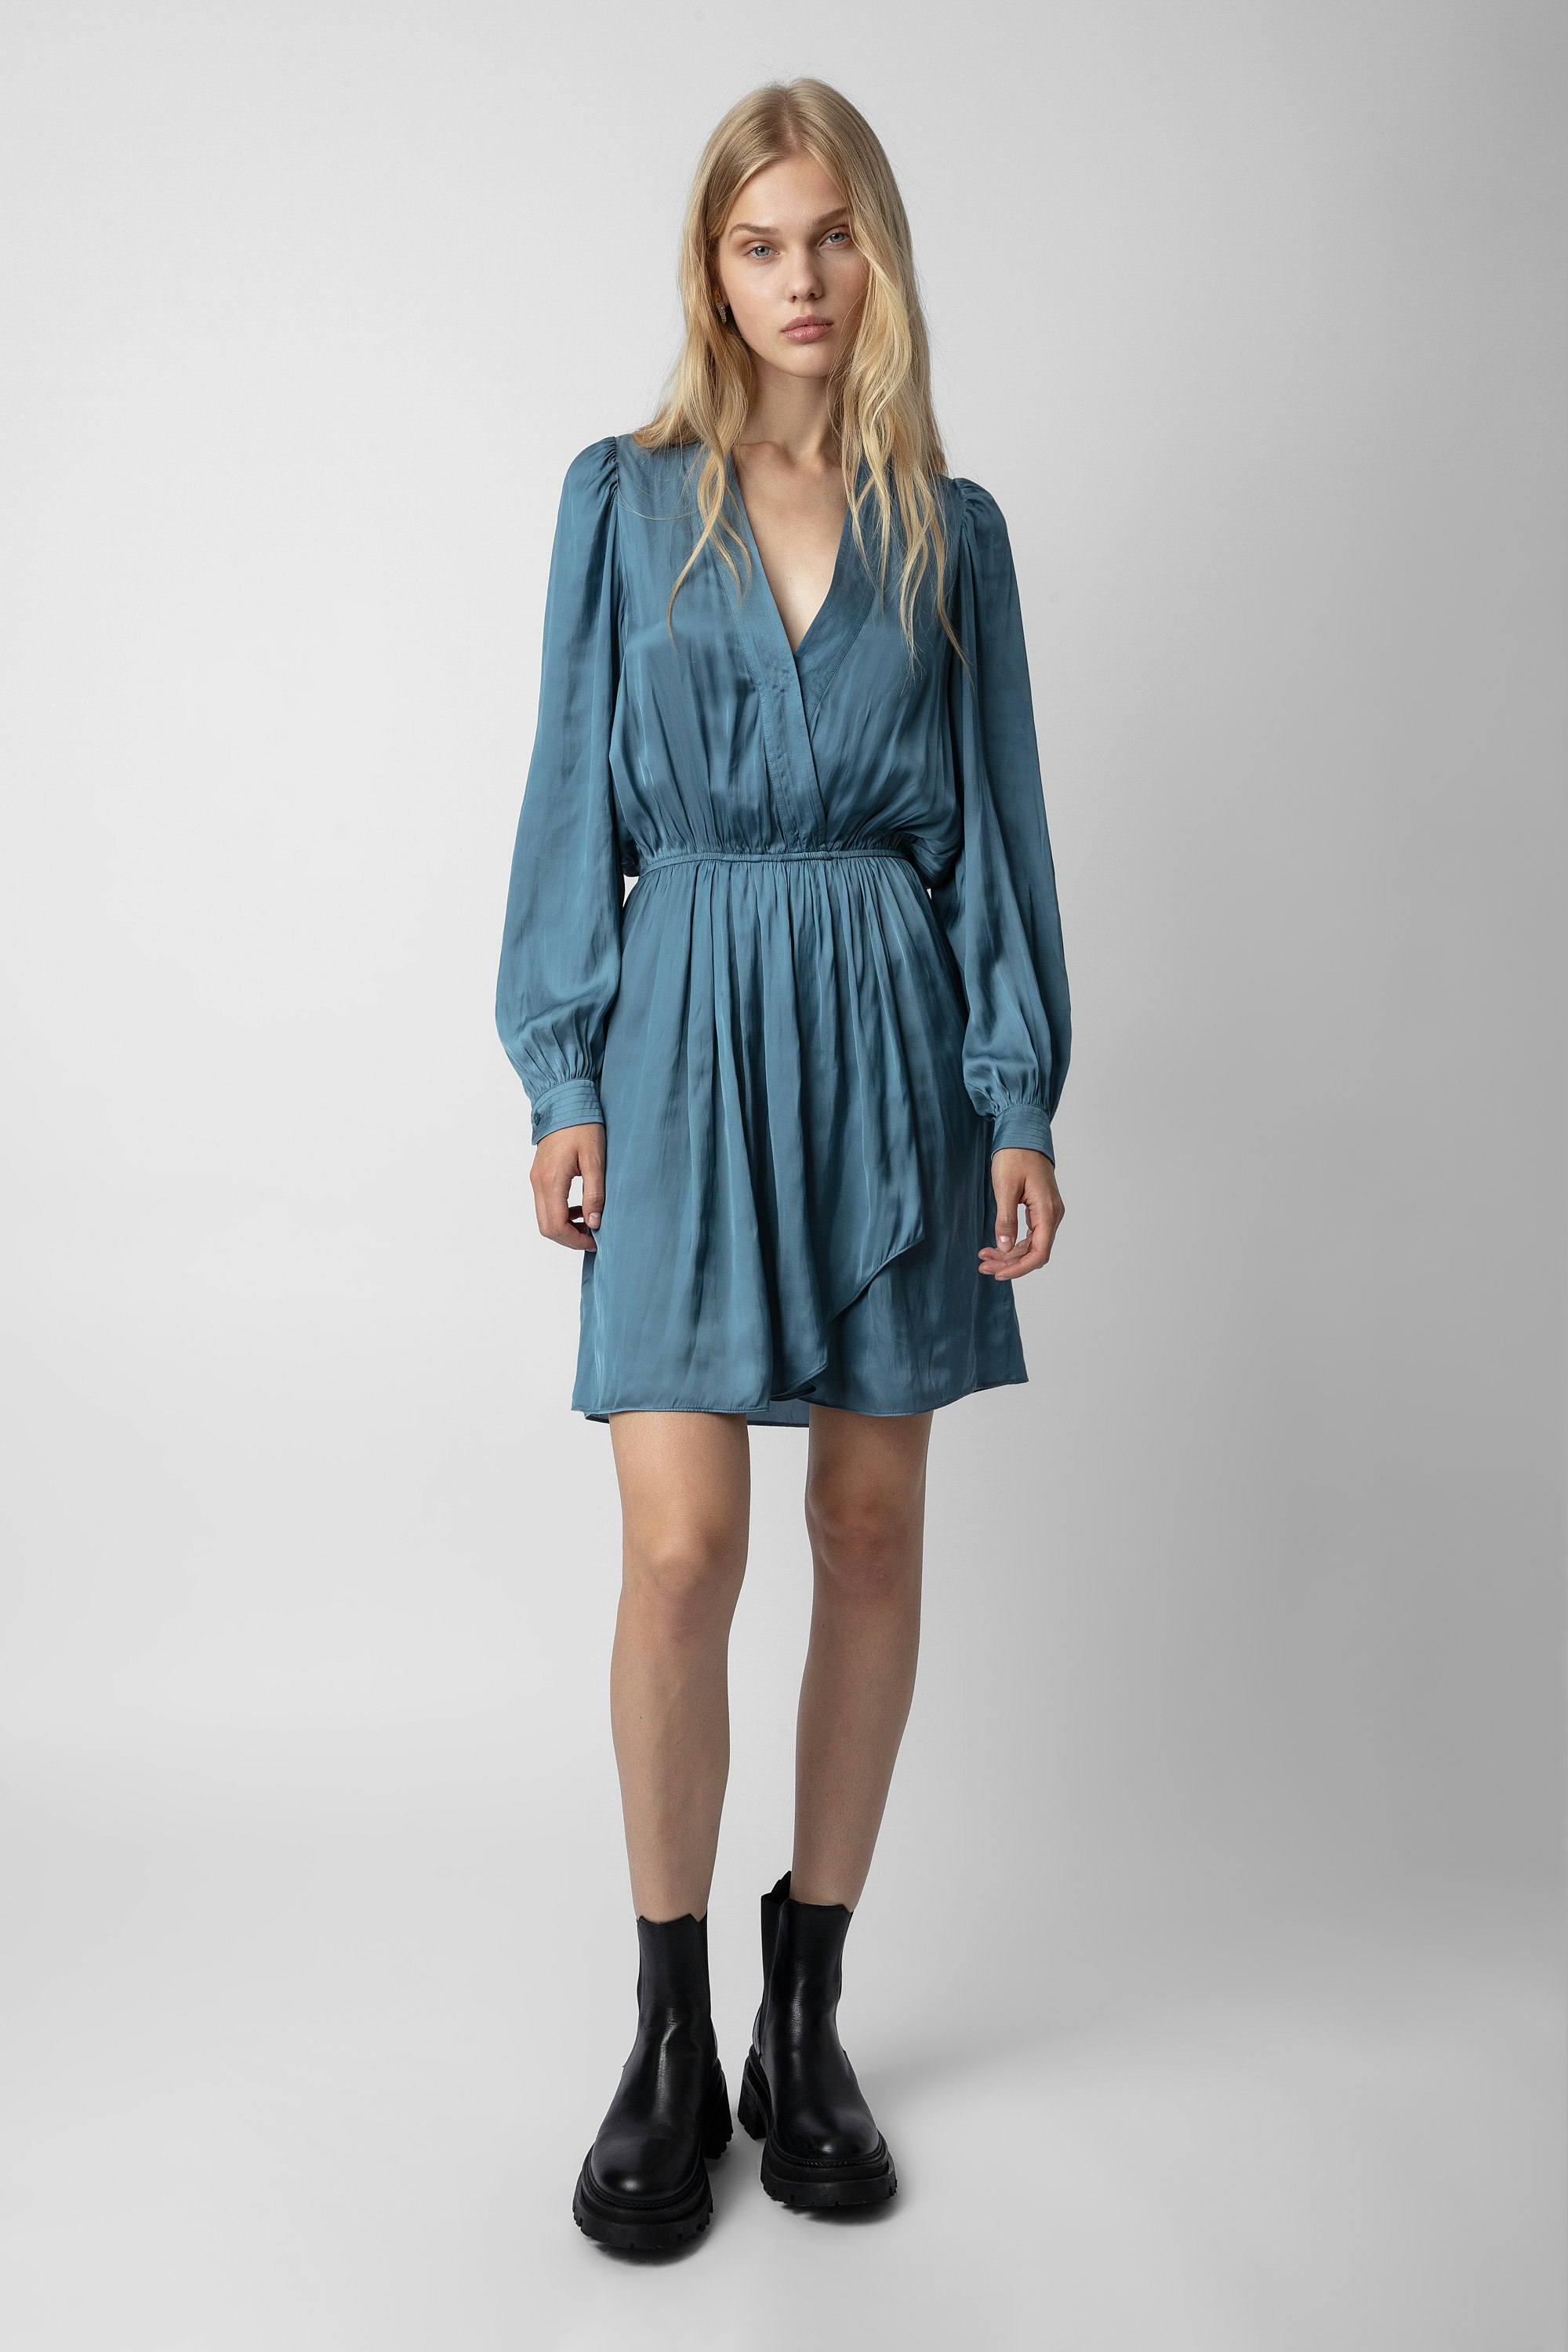 Robe Remember Satin - Robe courte en satin bleu ciel munie d'une jupe drapée.